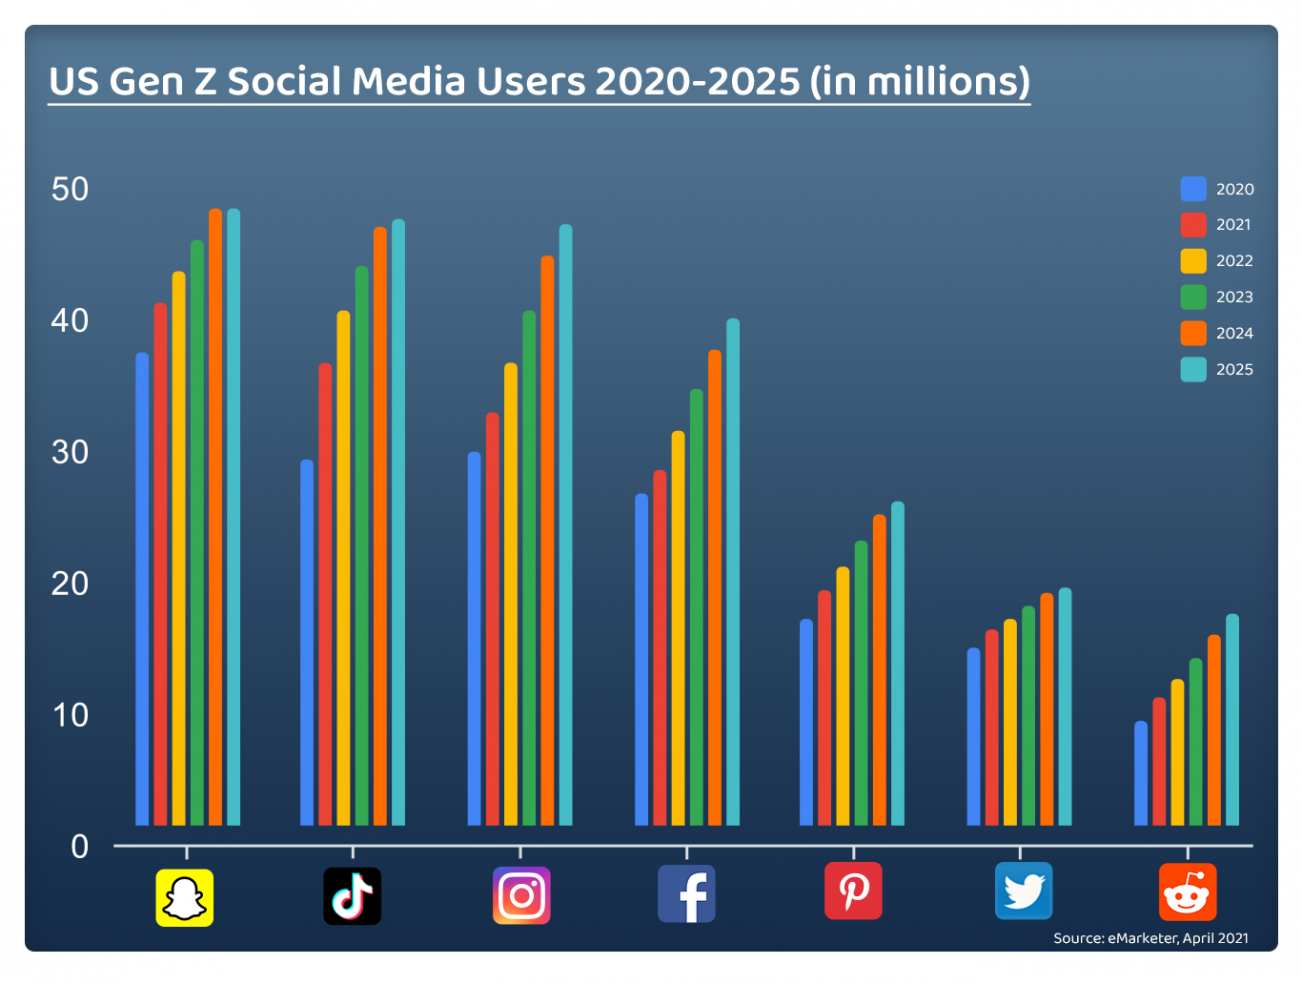 Favorite social media platforms among Generation Z